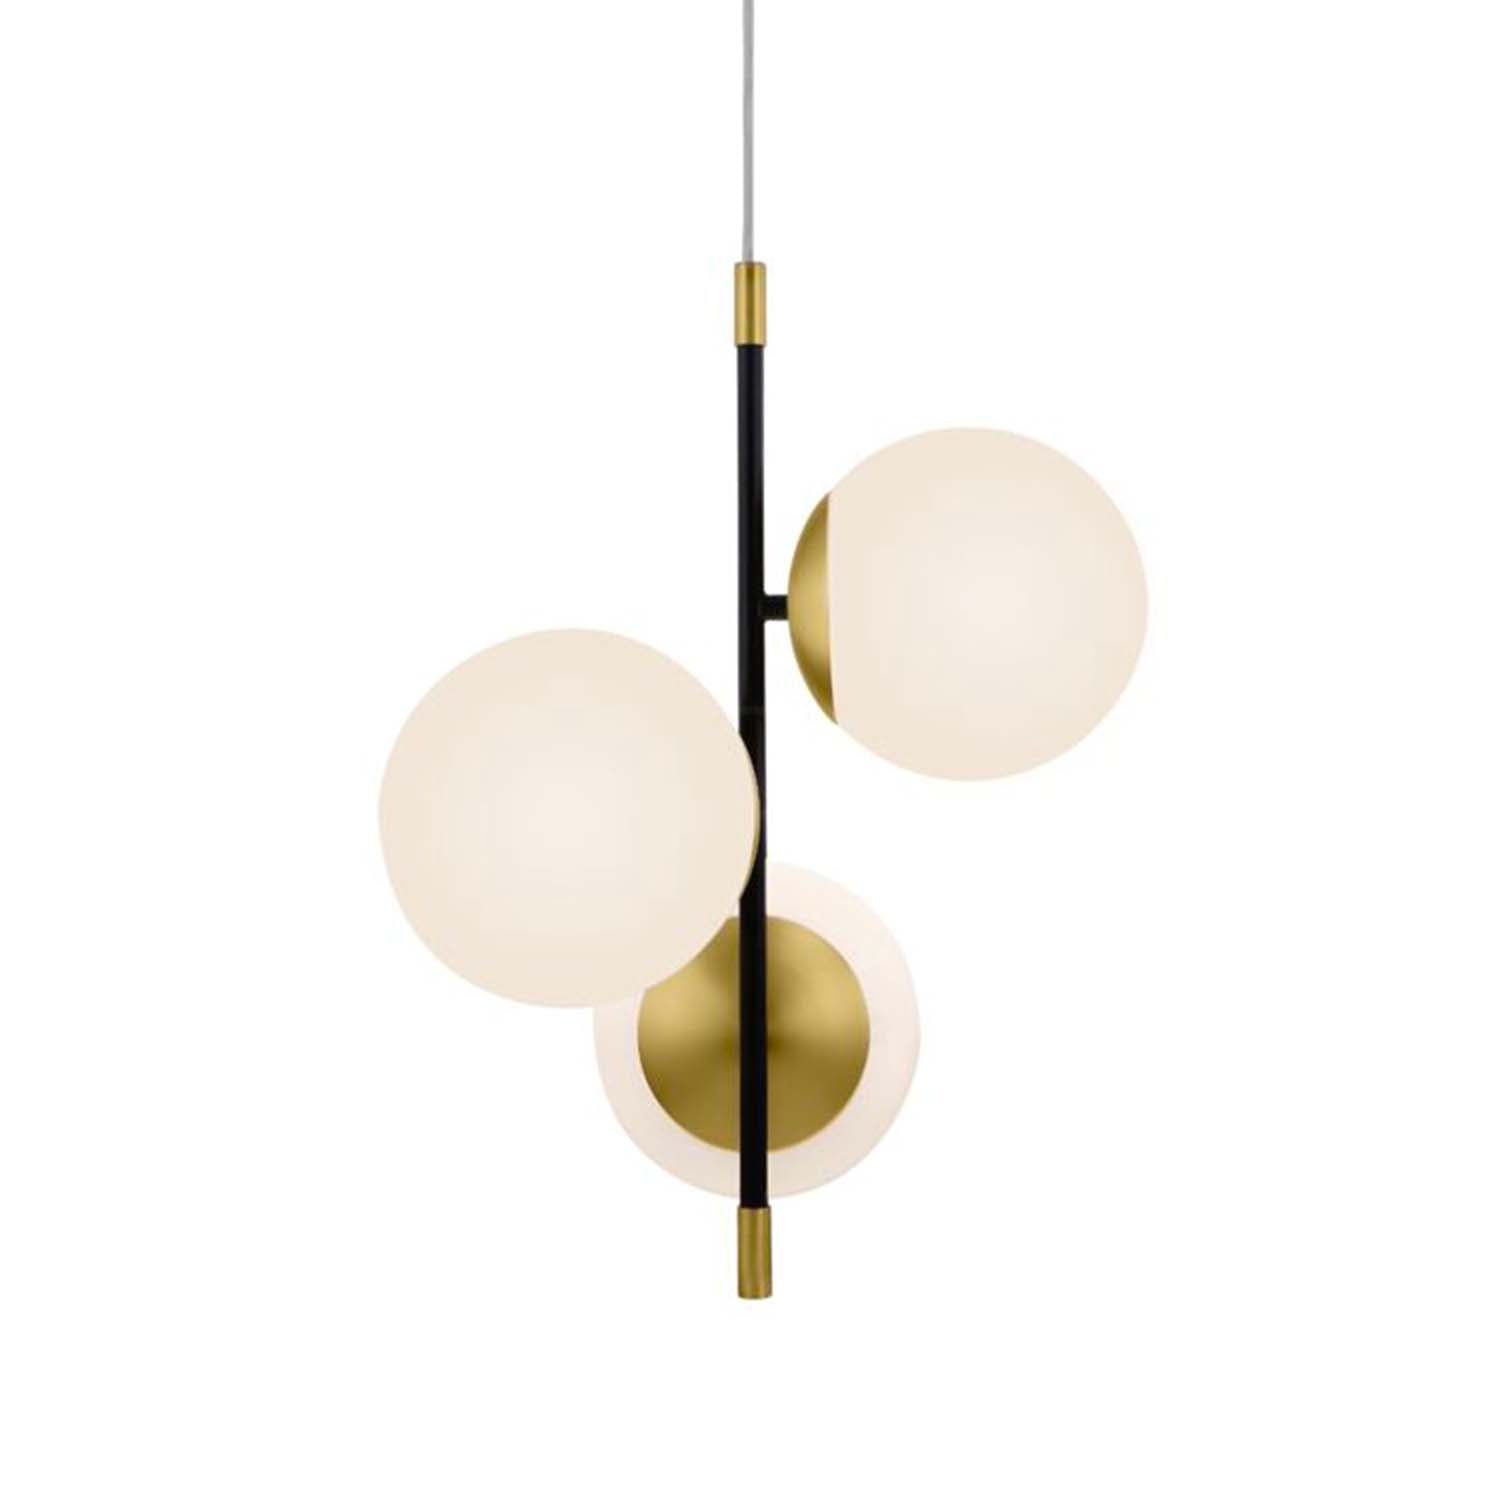 NOSTALGIA - Contemporary pendant light with glass balls, gold and black